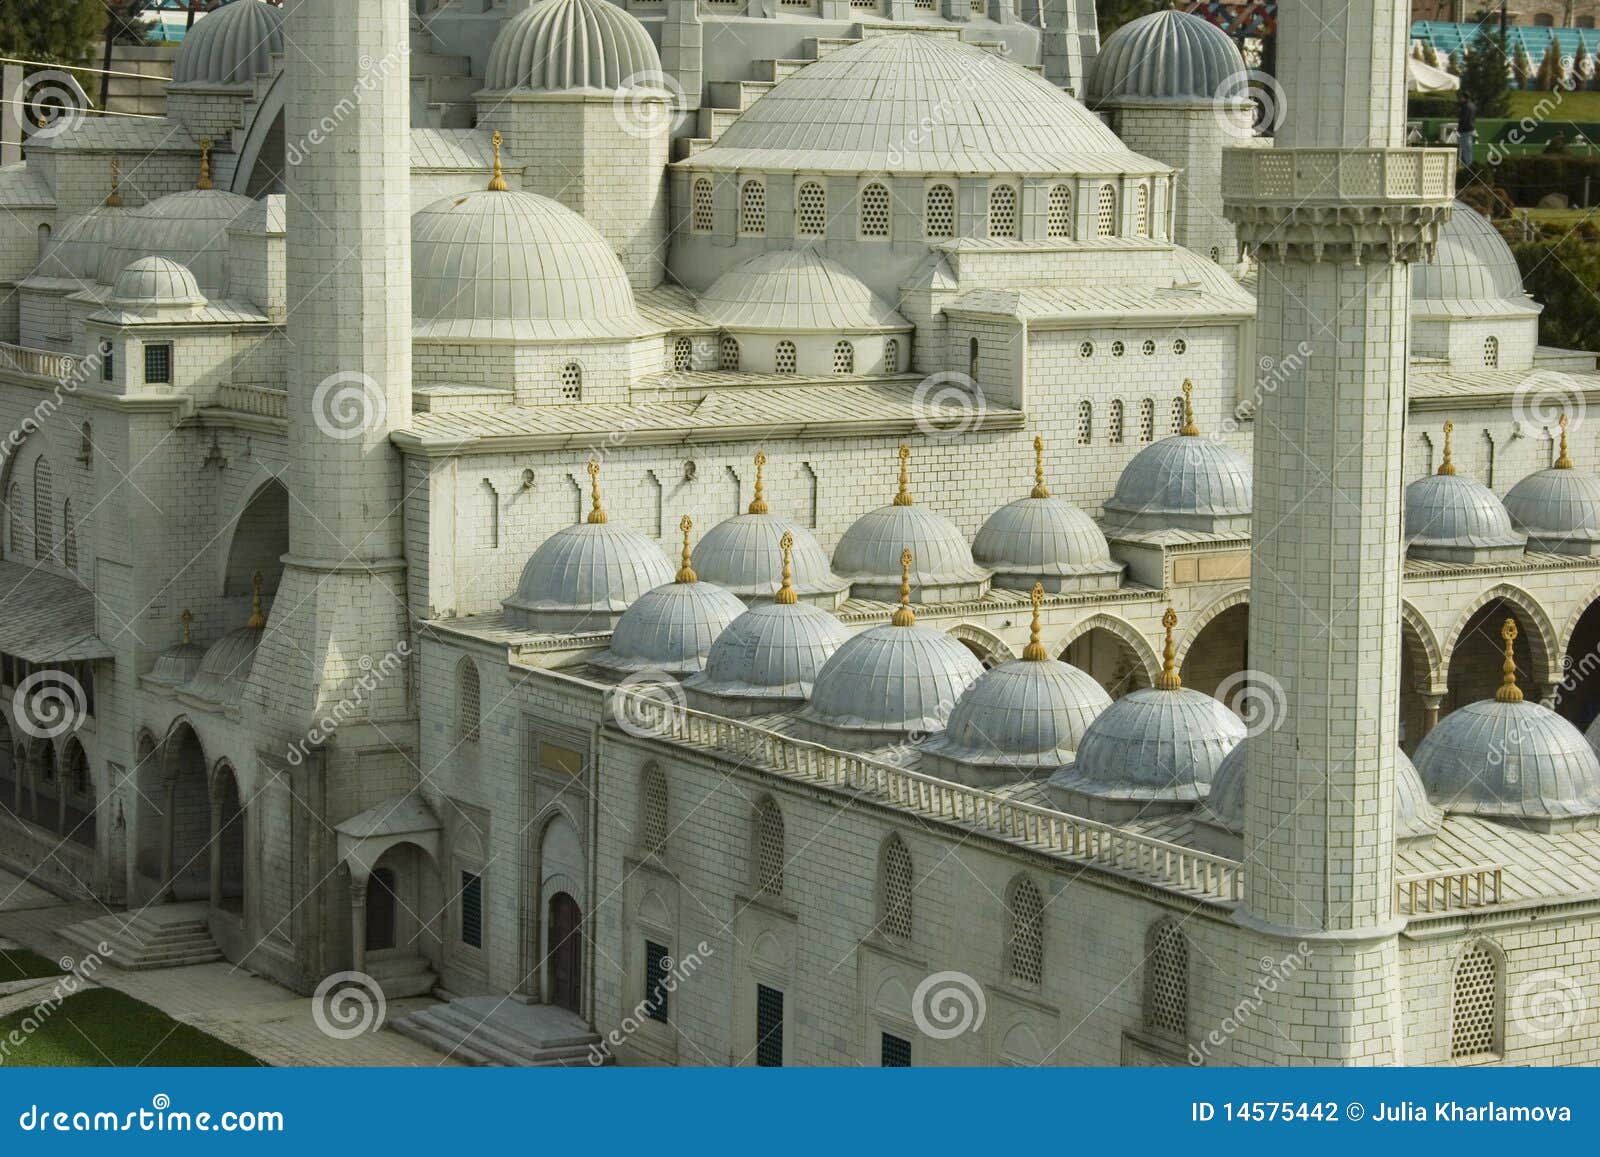 suleymaniye mosque closeup